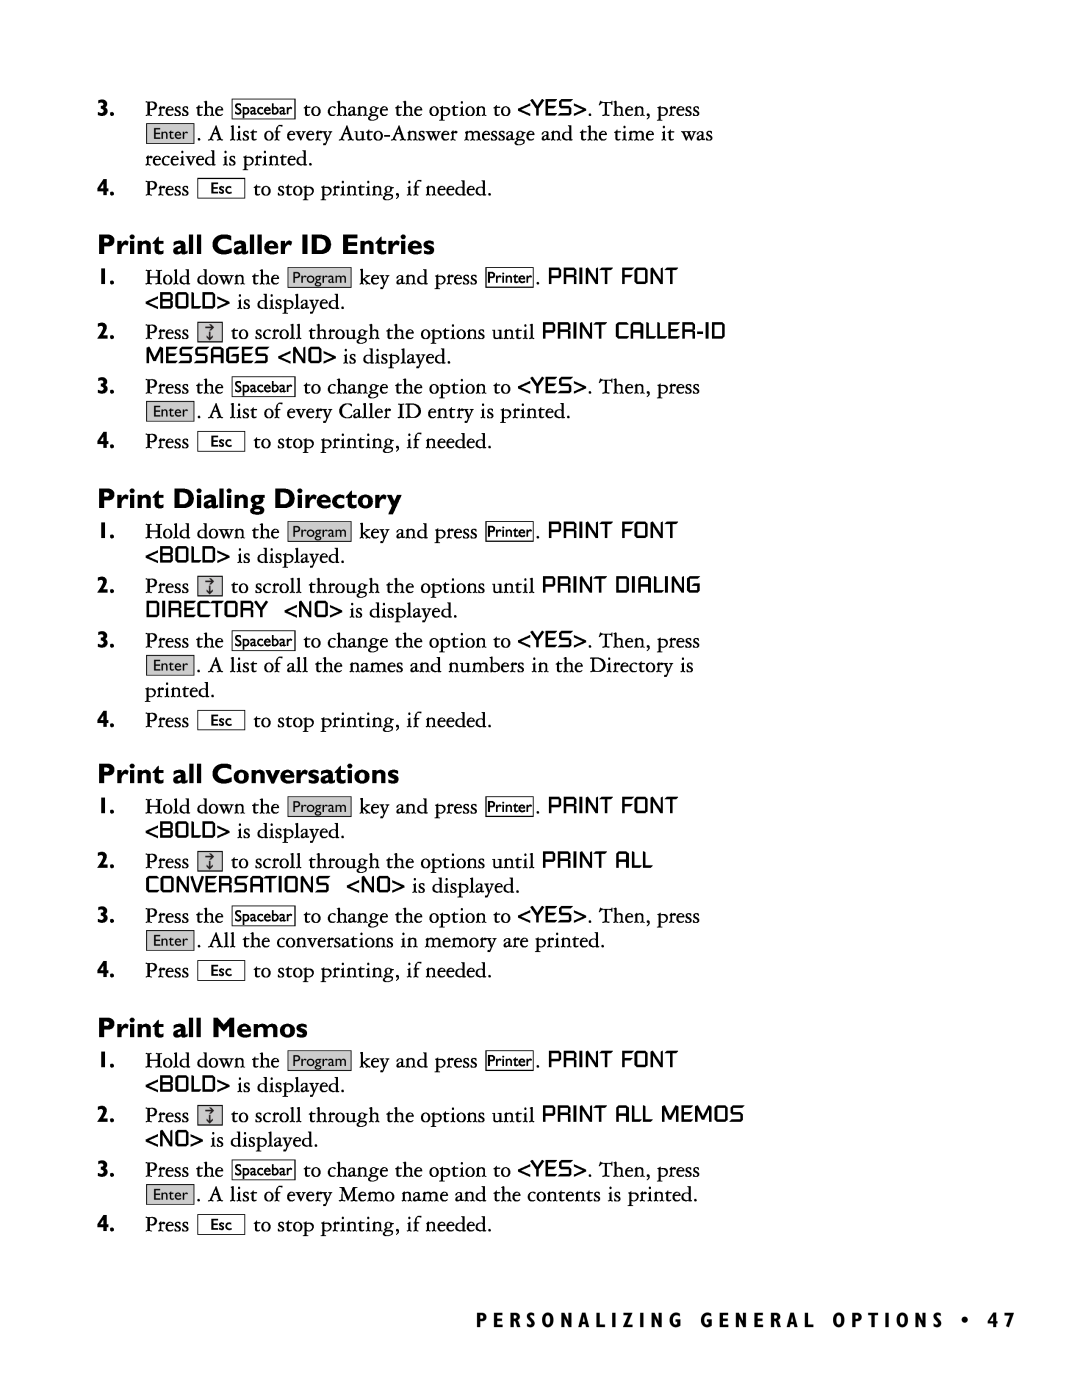 Ultratec PRO80TM manual Print all Caller ID Entries, Print Dialing Directory, Print all Conversations, Print all Memos 